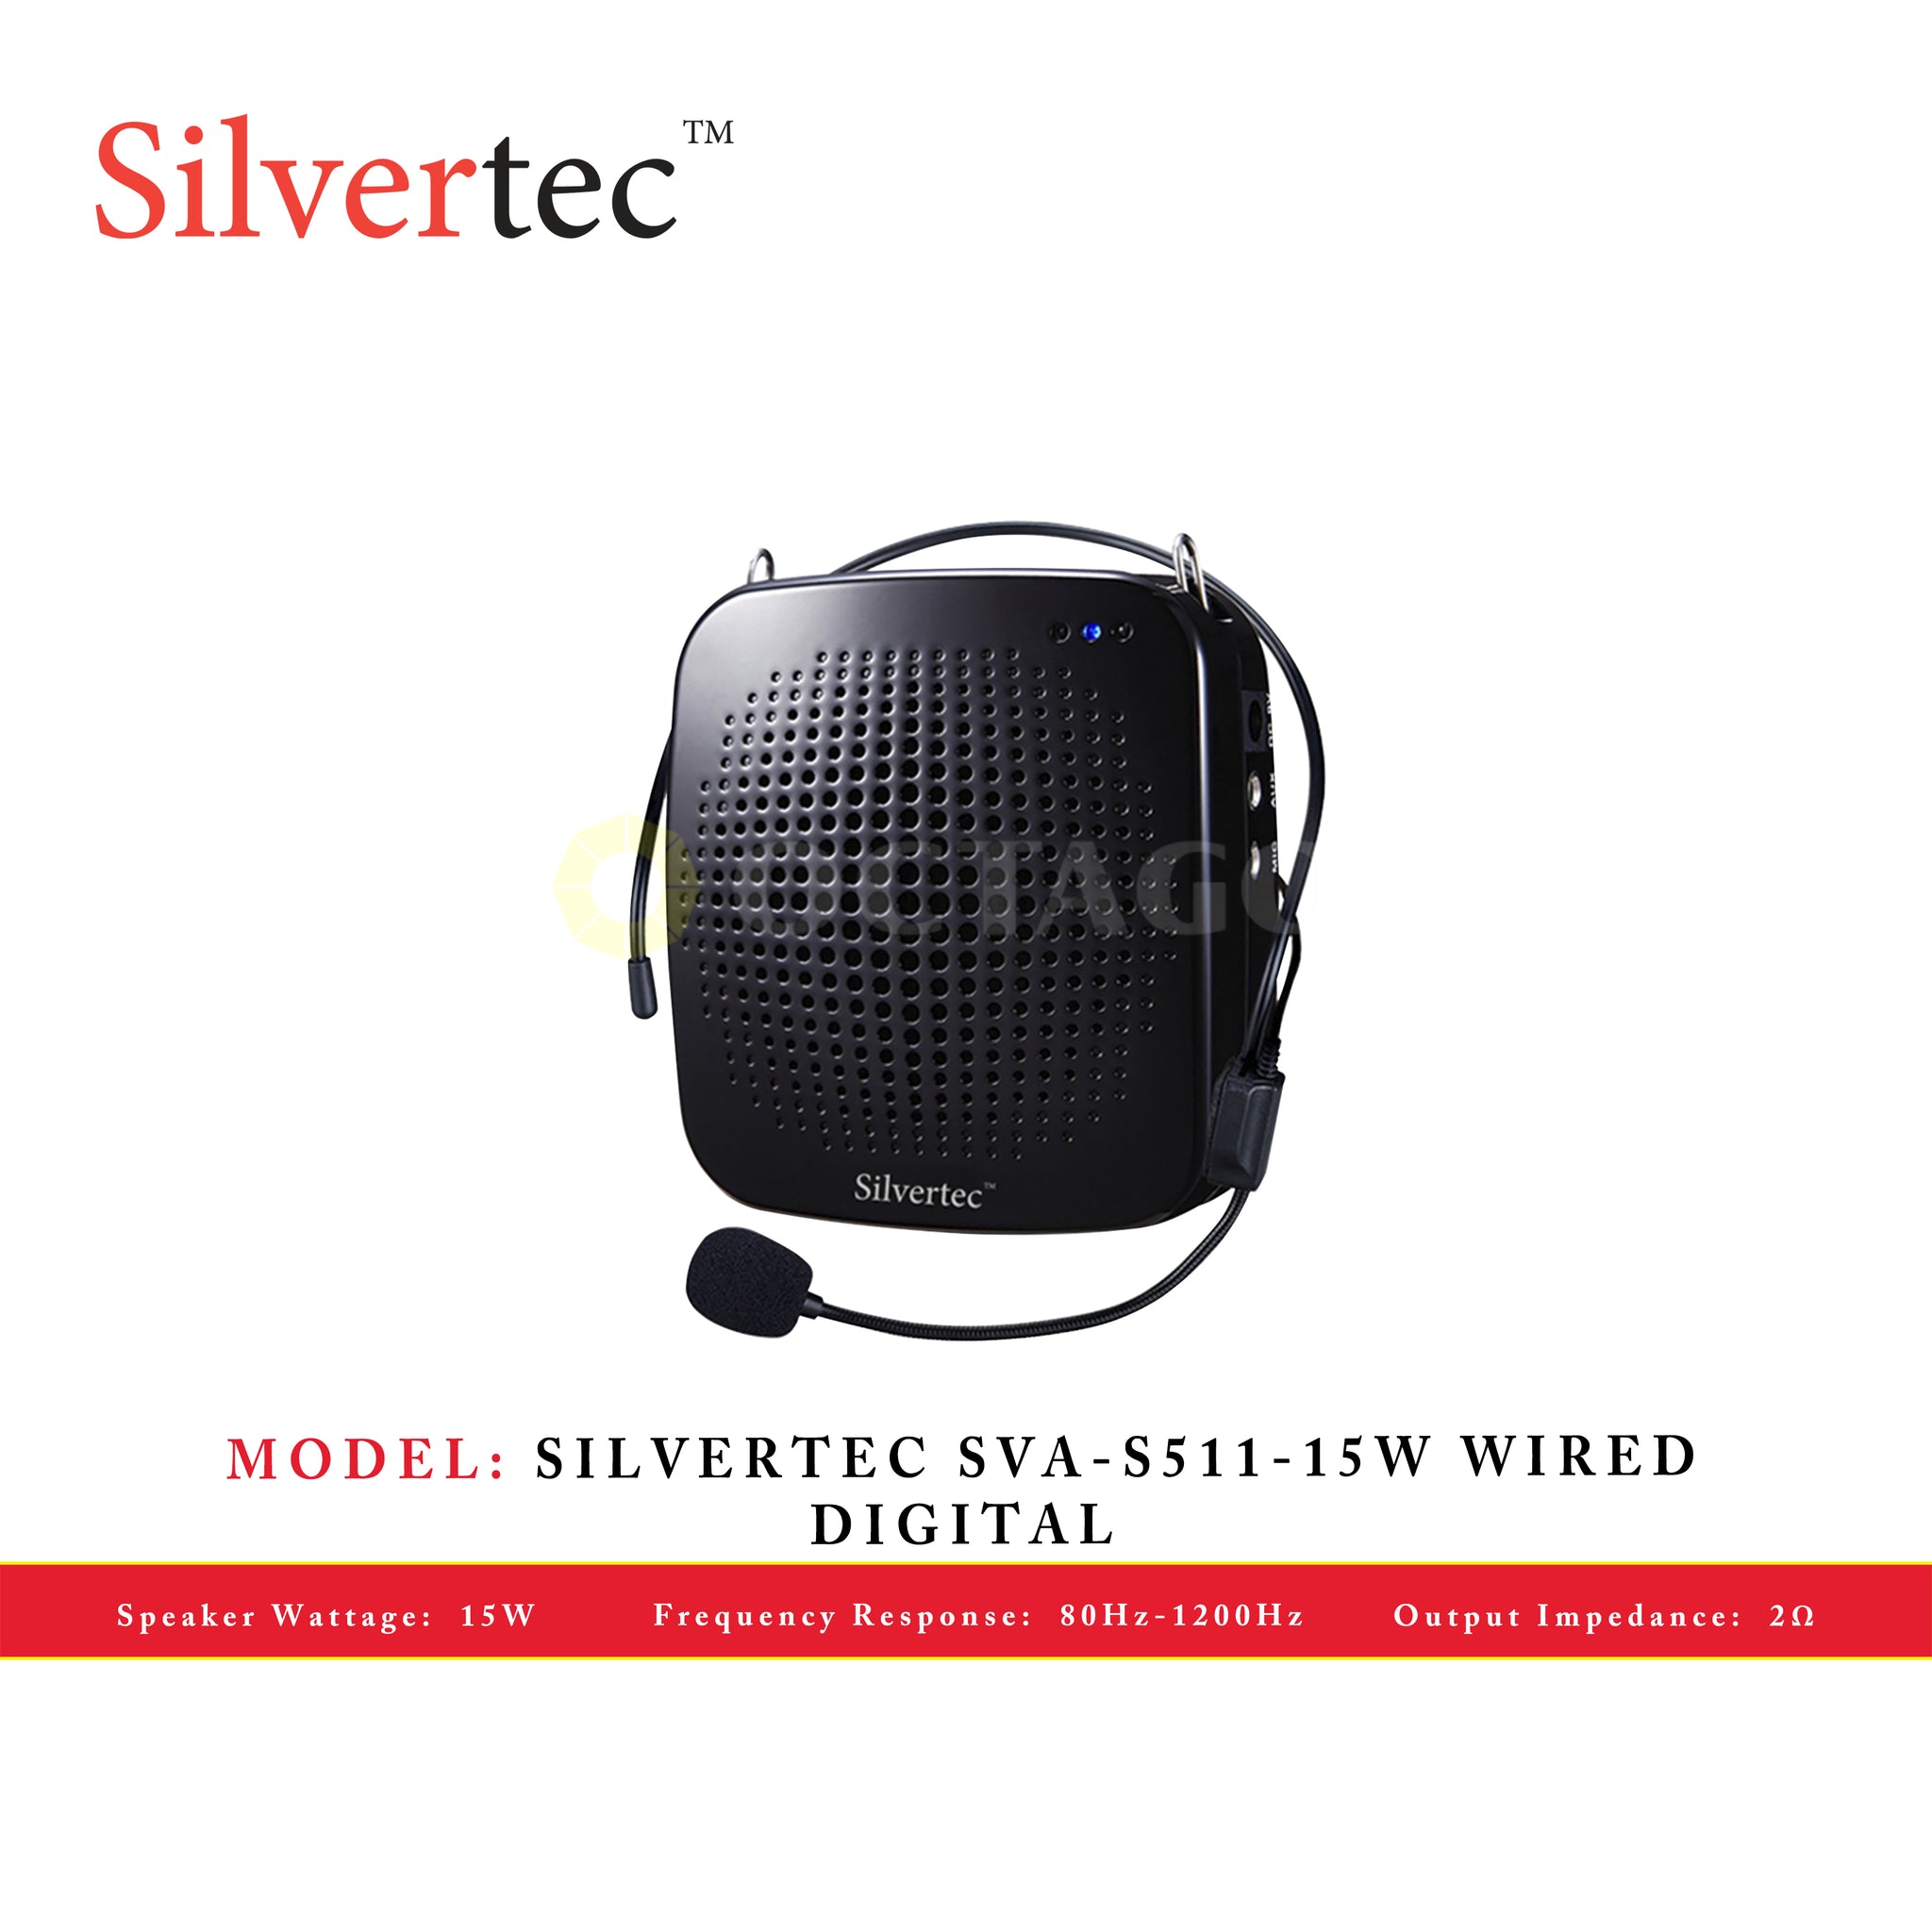 SILVERTEC SVA-S511-15W WIRED DIGITAL